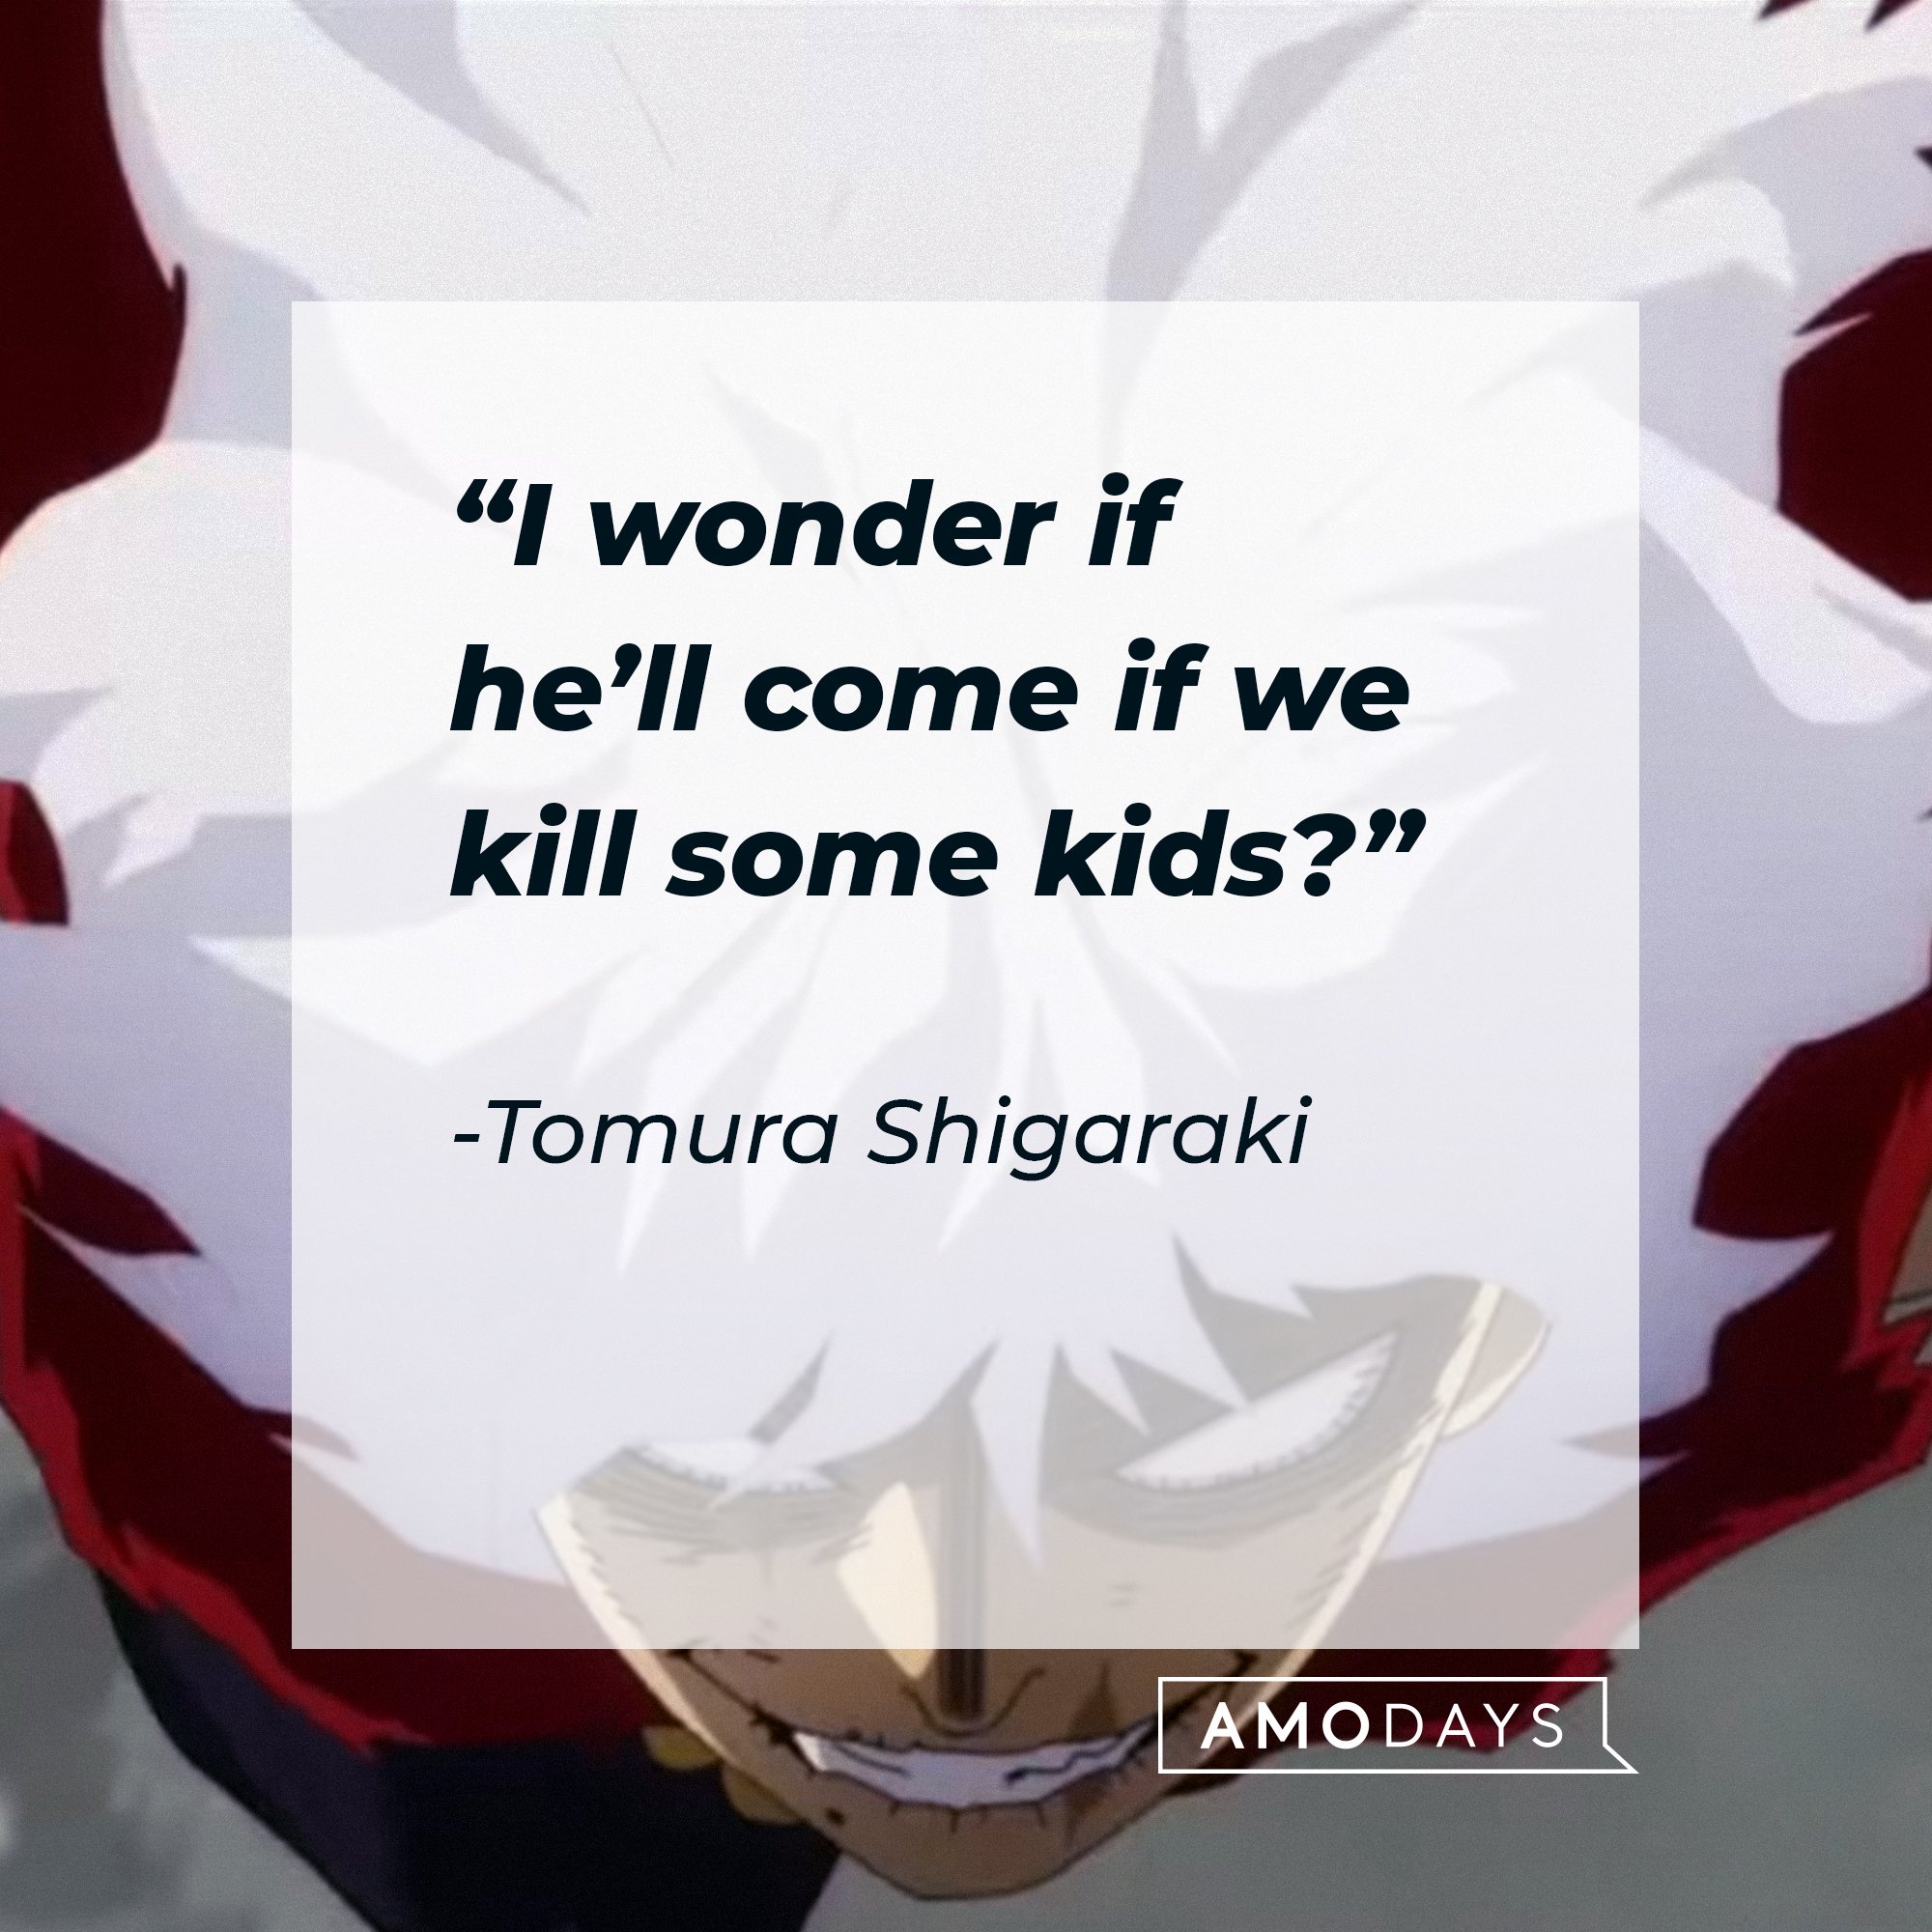 Tomura Shigaraki’s quote: “I wonder if he’ll come if we kill some kids?" | Image: AmoDays